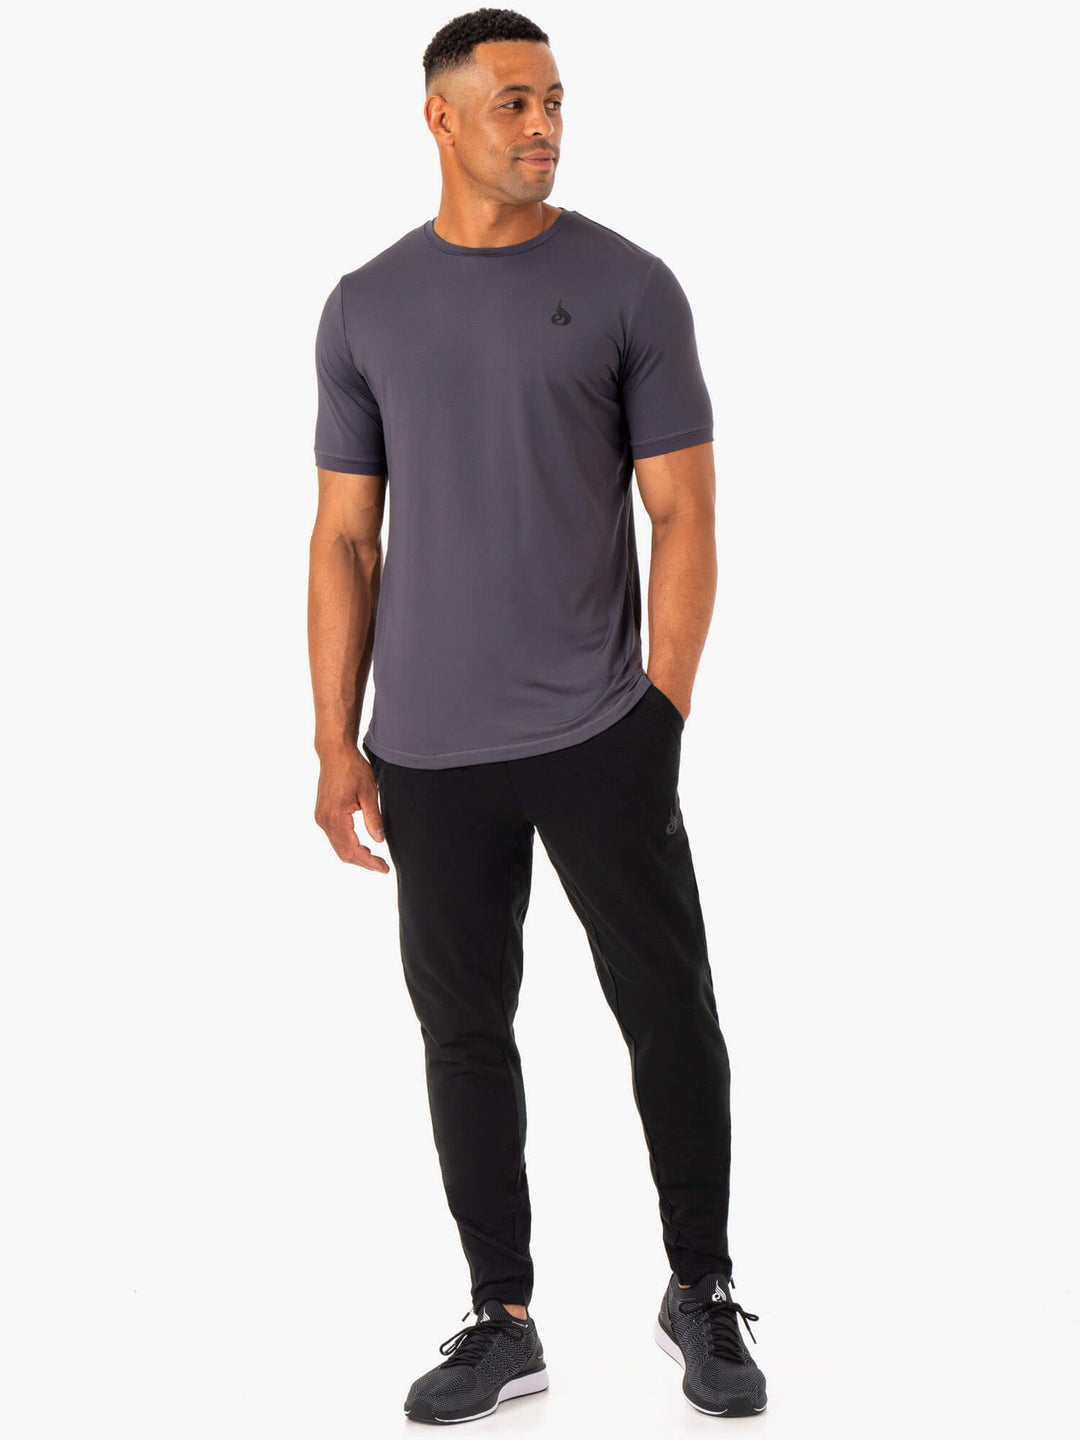 Optimal Gym Track Pant - Black Clothing Ryderwear 